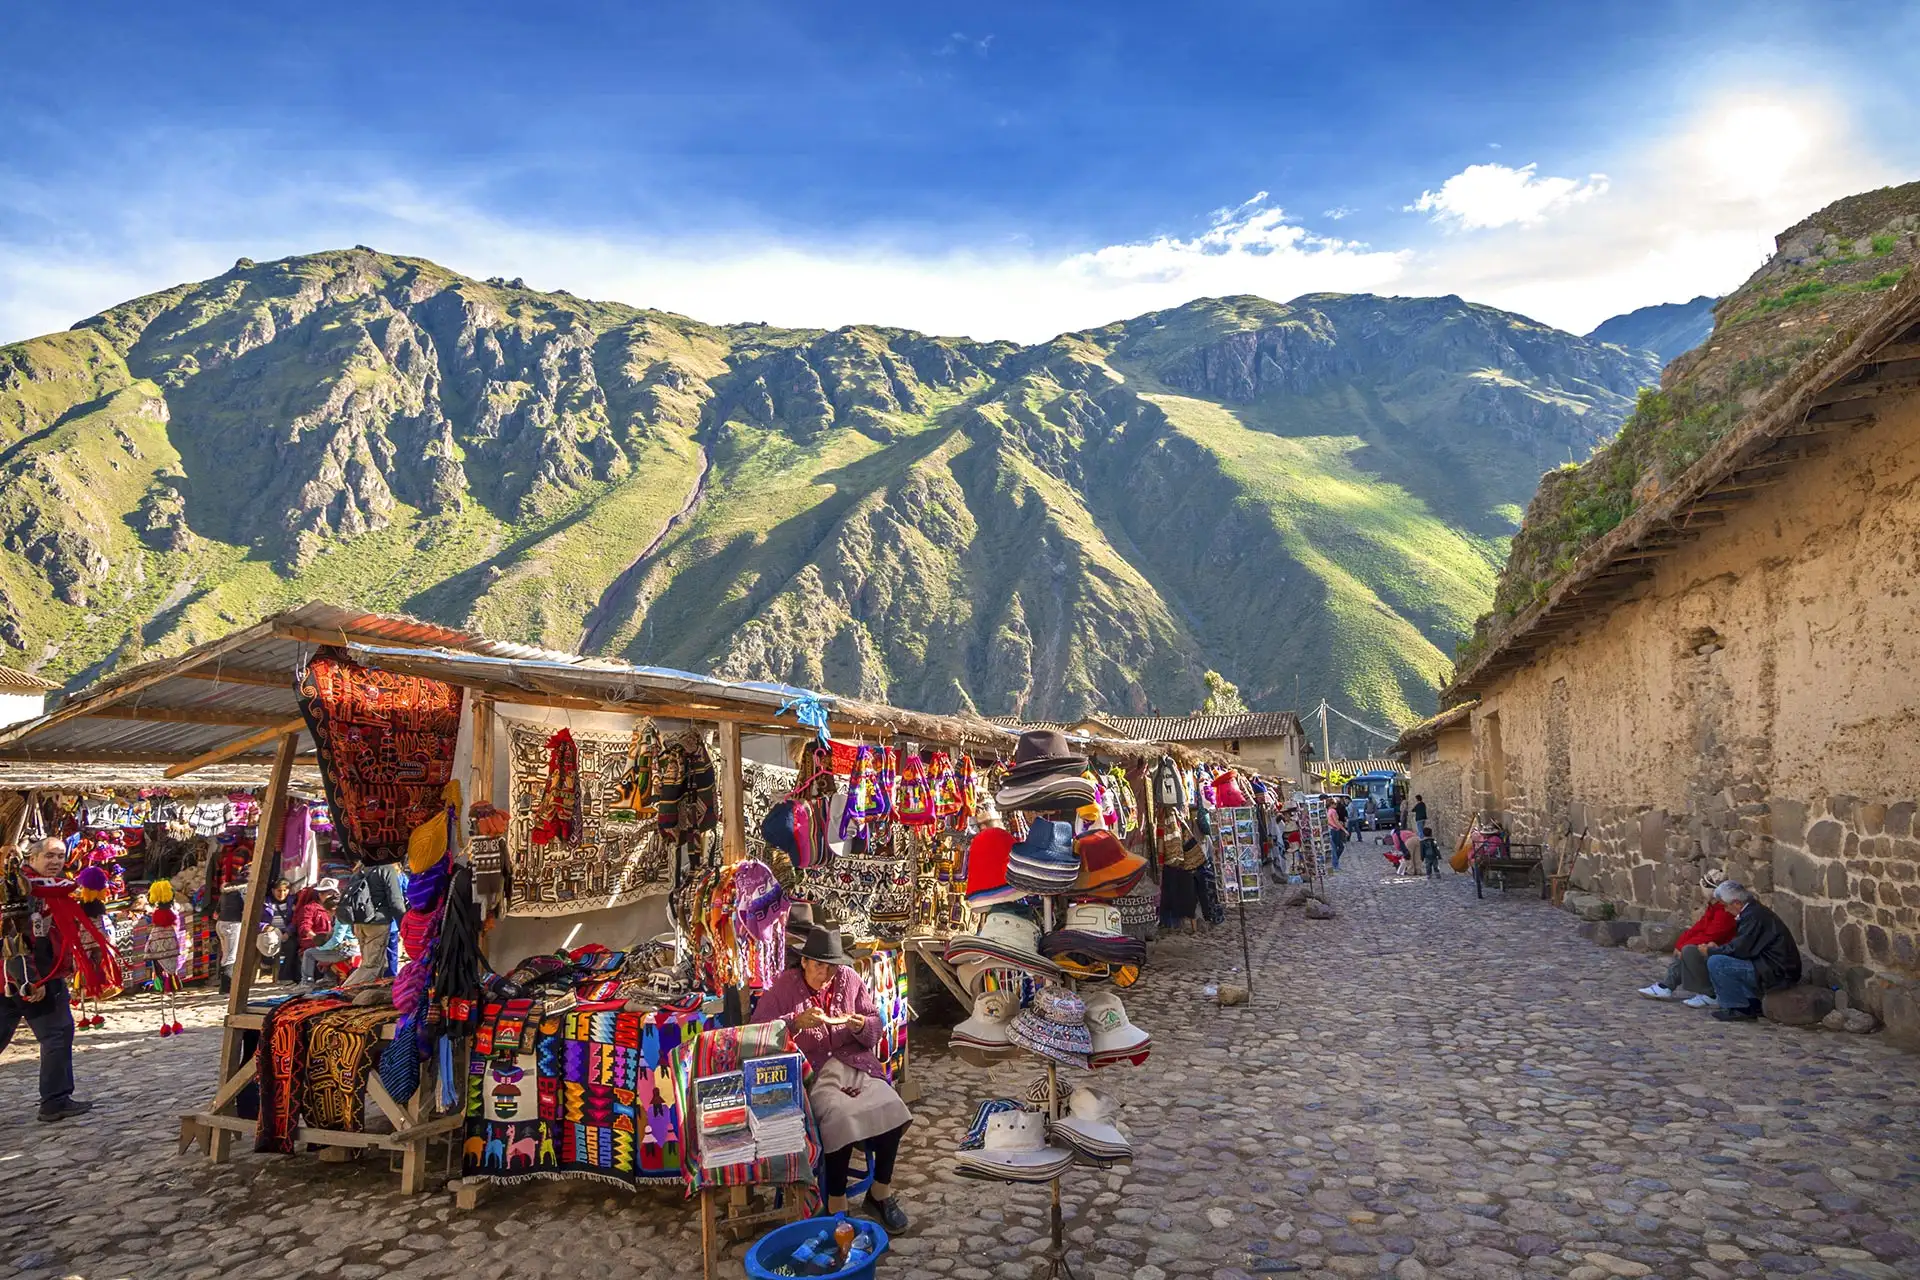 Ollantaytambo, Peru; Photo Courtesy of klublu/Shutterstock.com